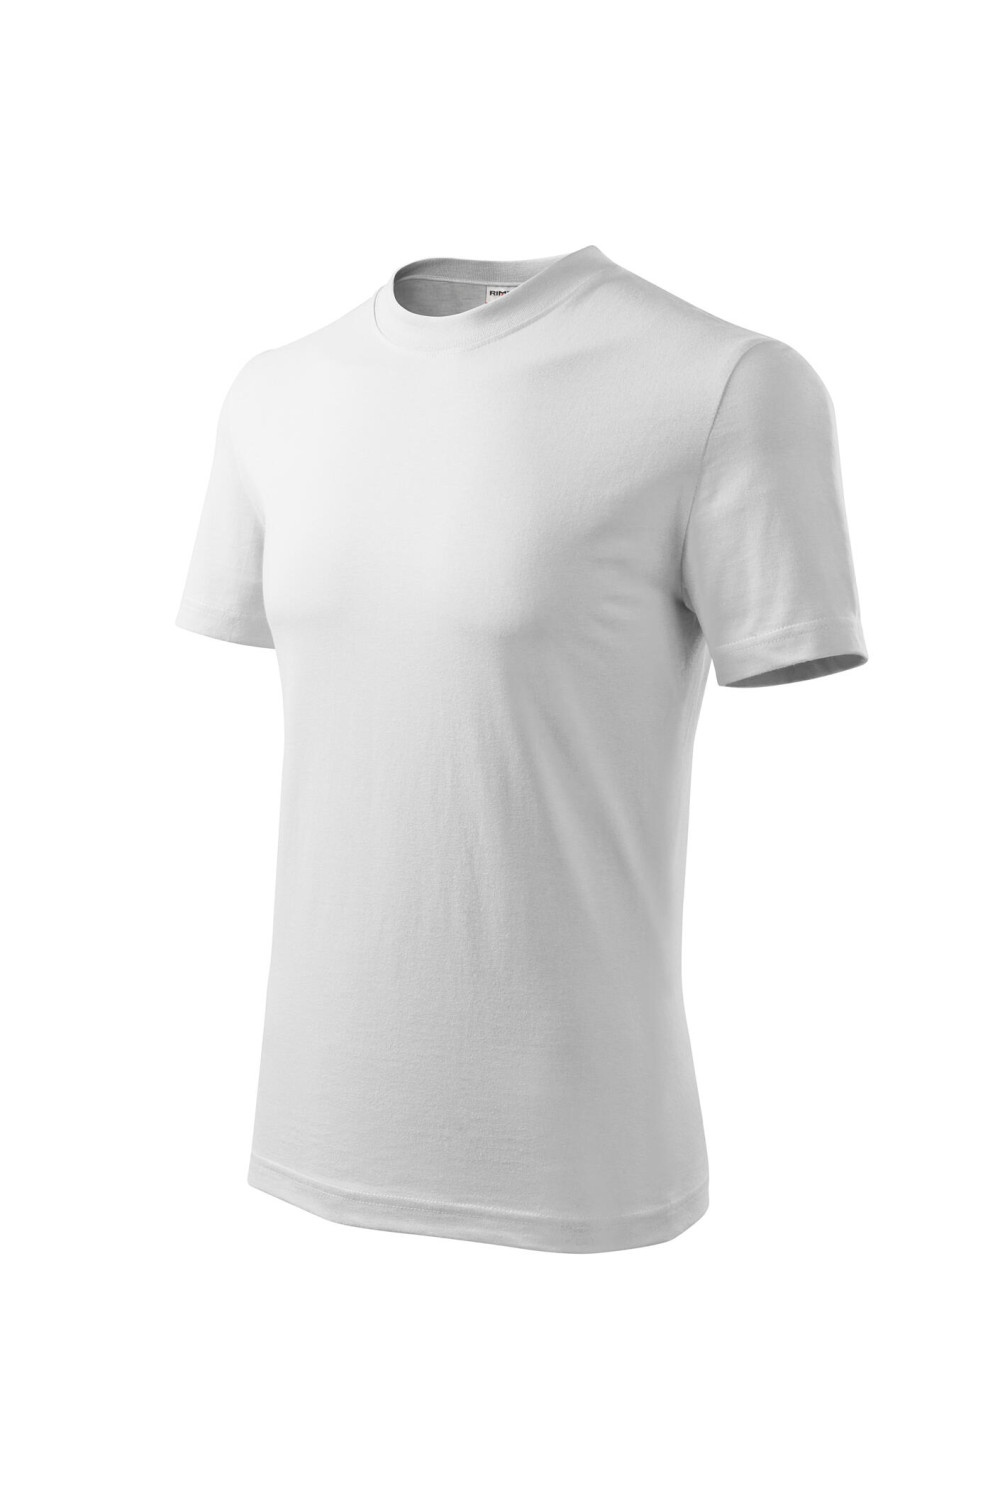 RECALL R07 MALFINI ADLER Koszulka t-shirt unisex biały